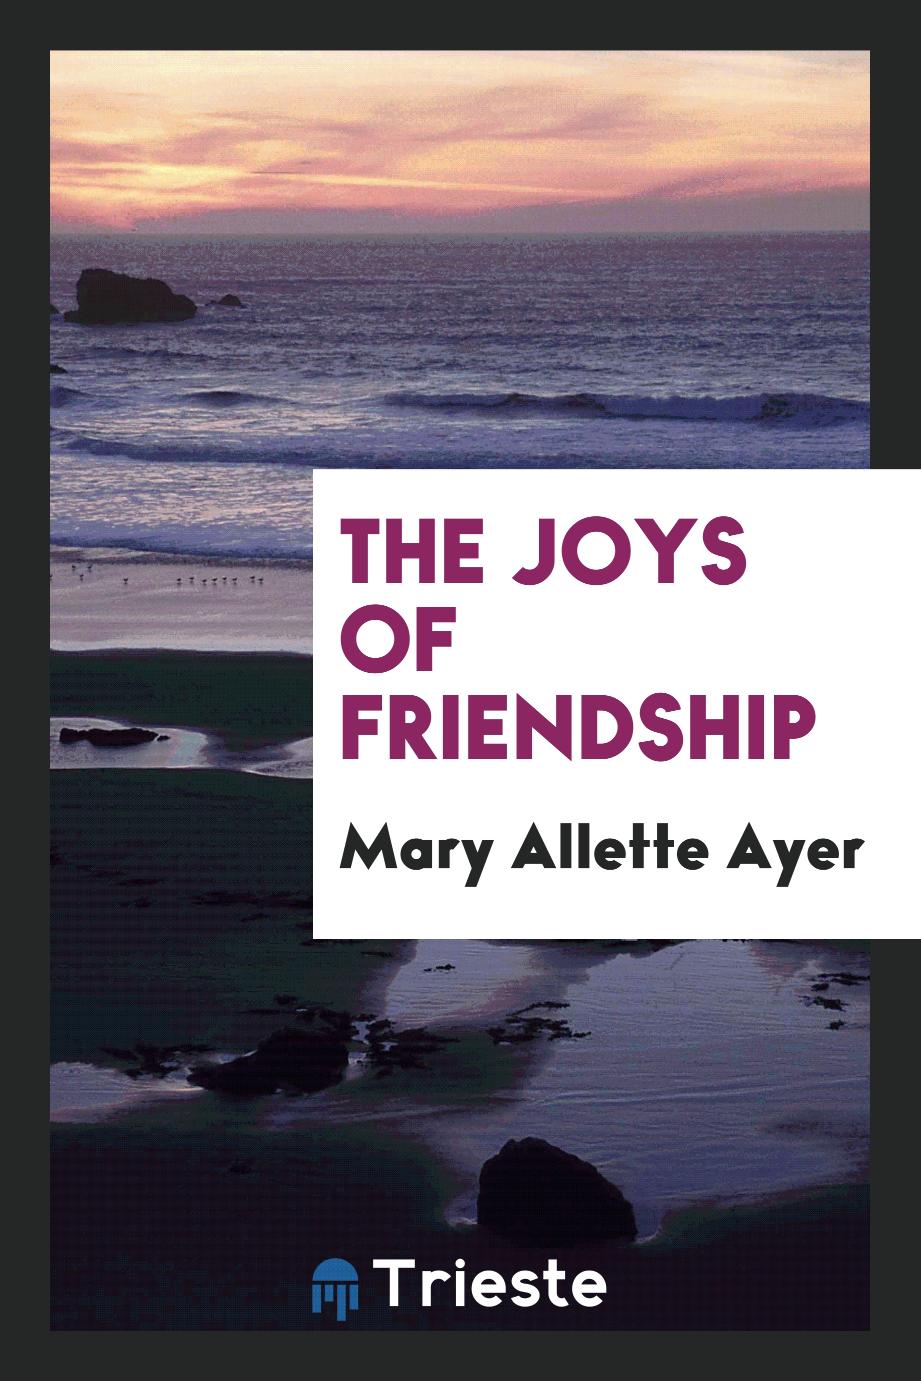 The joys of friendship